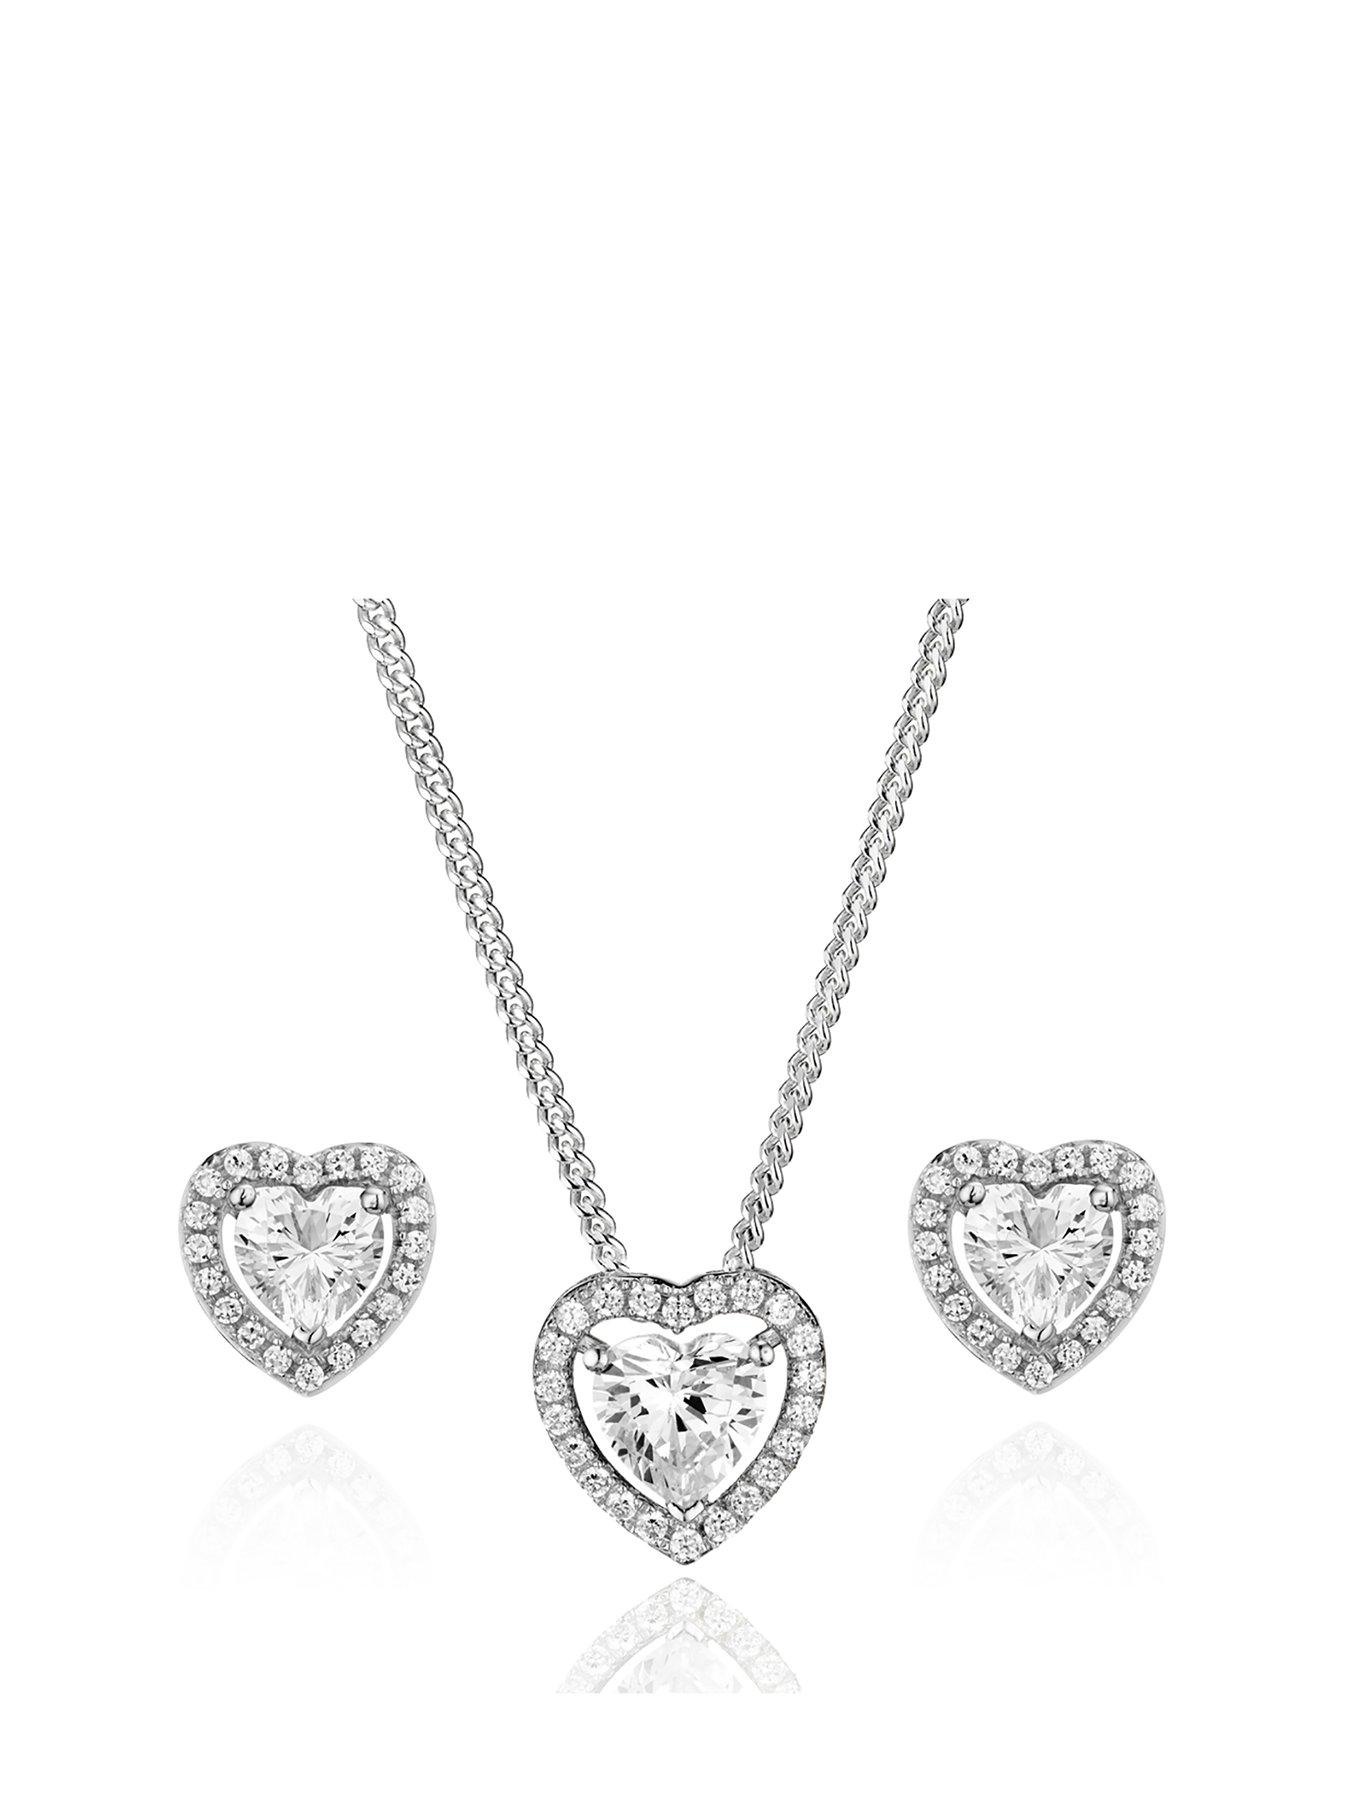  Silver Cubic Zirconia Heart Pendant and Stud Earrings Set